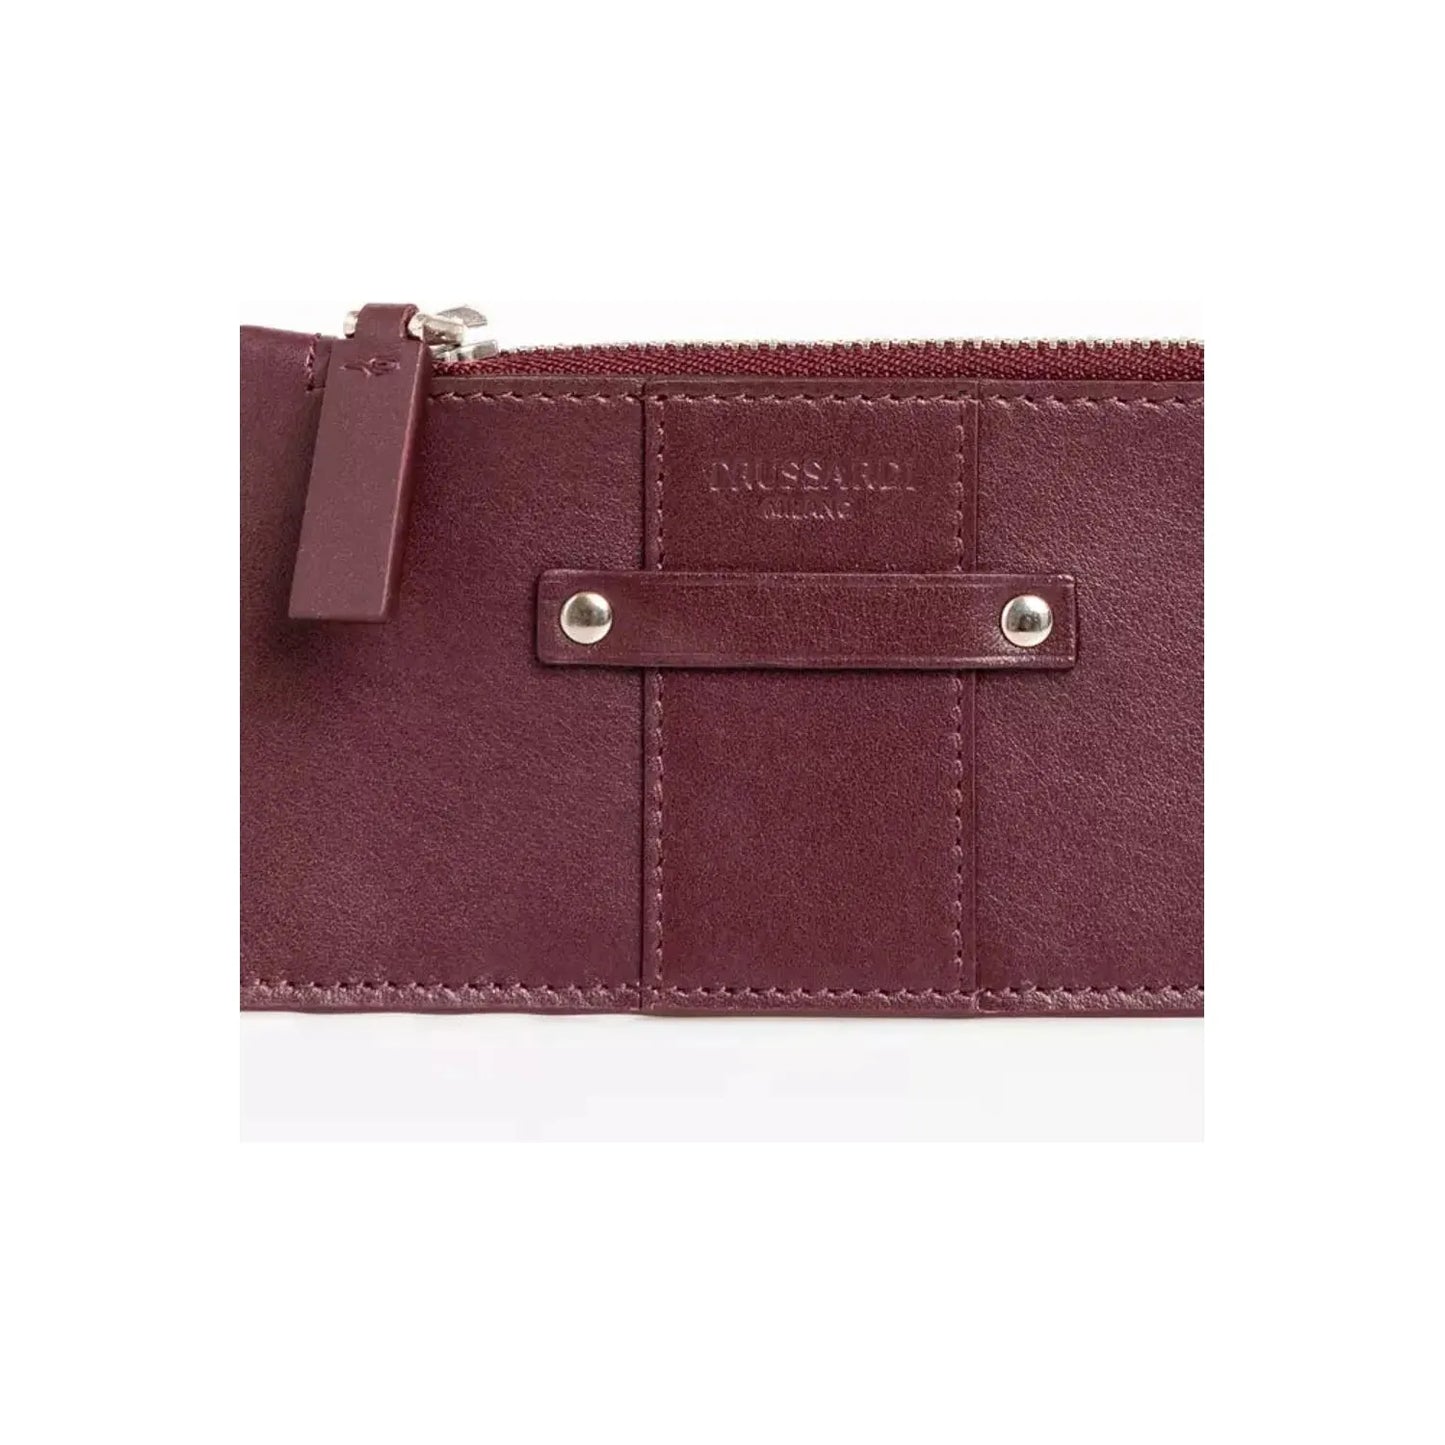 Trussardi Elegant Soft Leather Card Holder in Rich Brown Wallet r-wallet-6 stock_product_image_21579_807298518-25-d0d7815d-4a7.webp